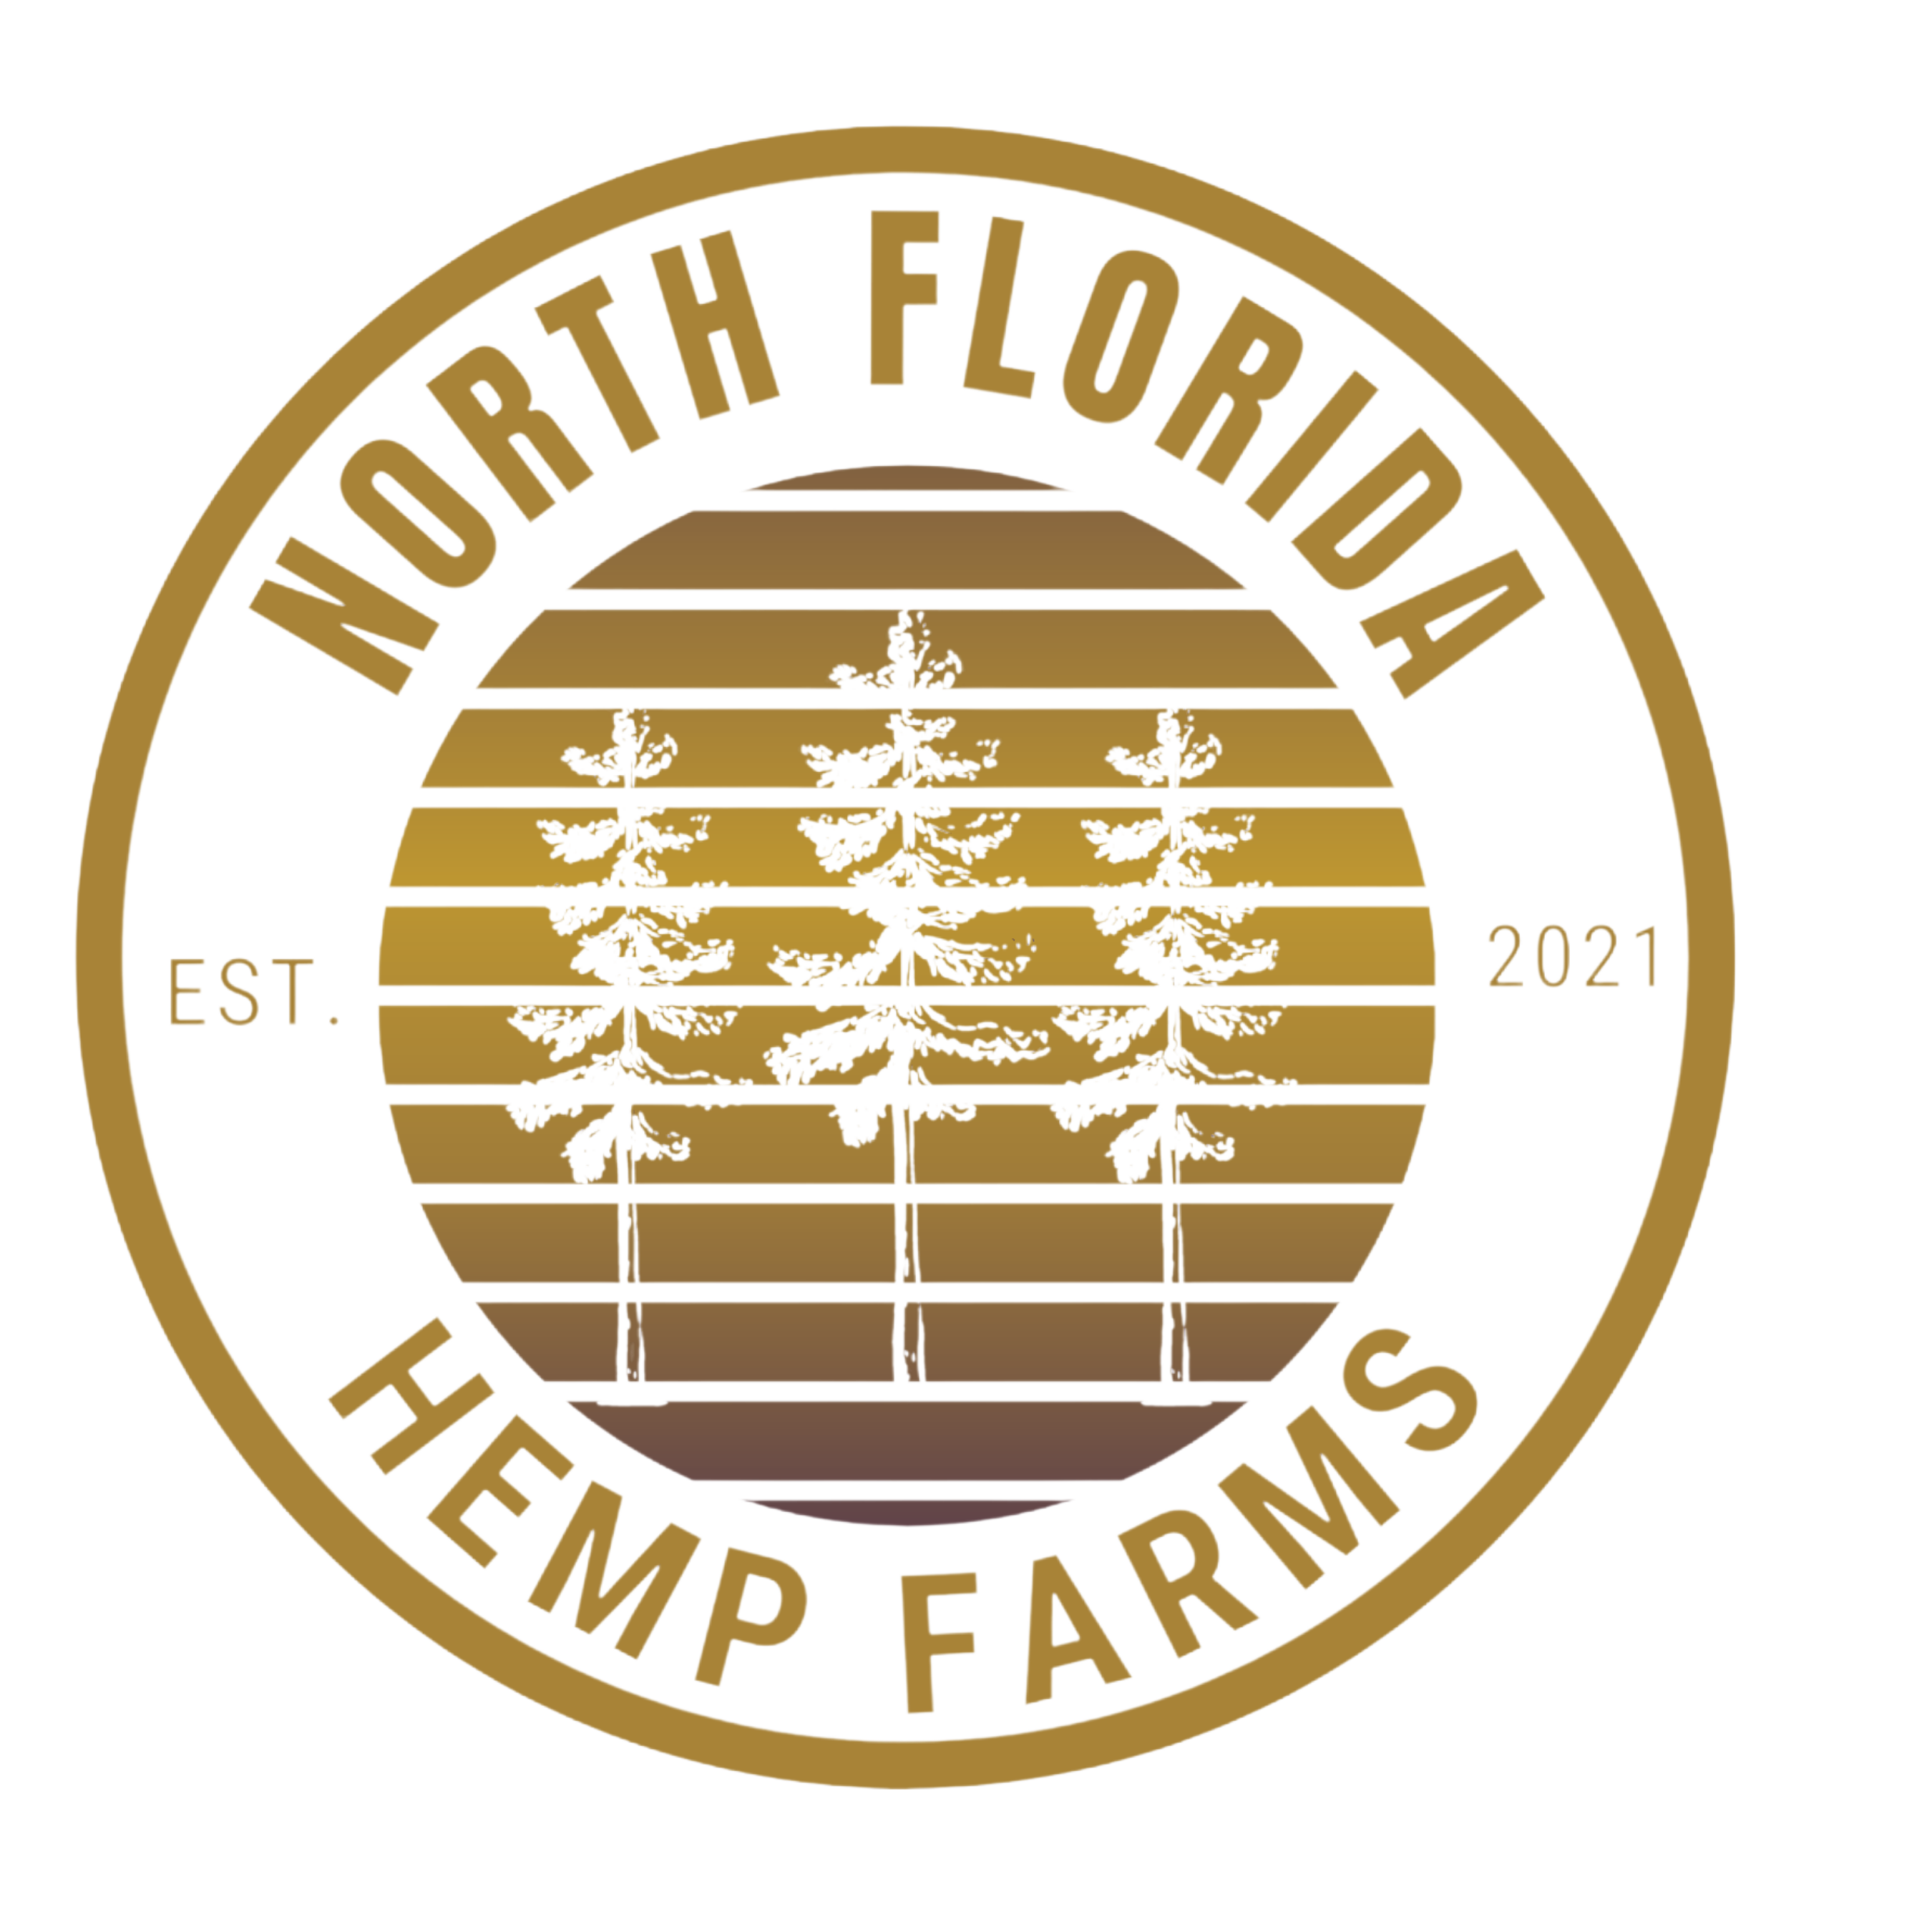 North Florida Hemp Farms